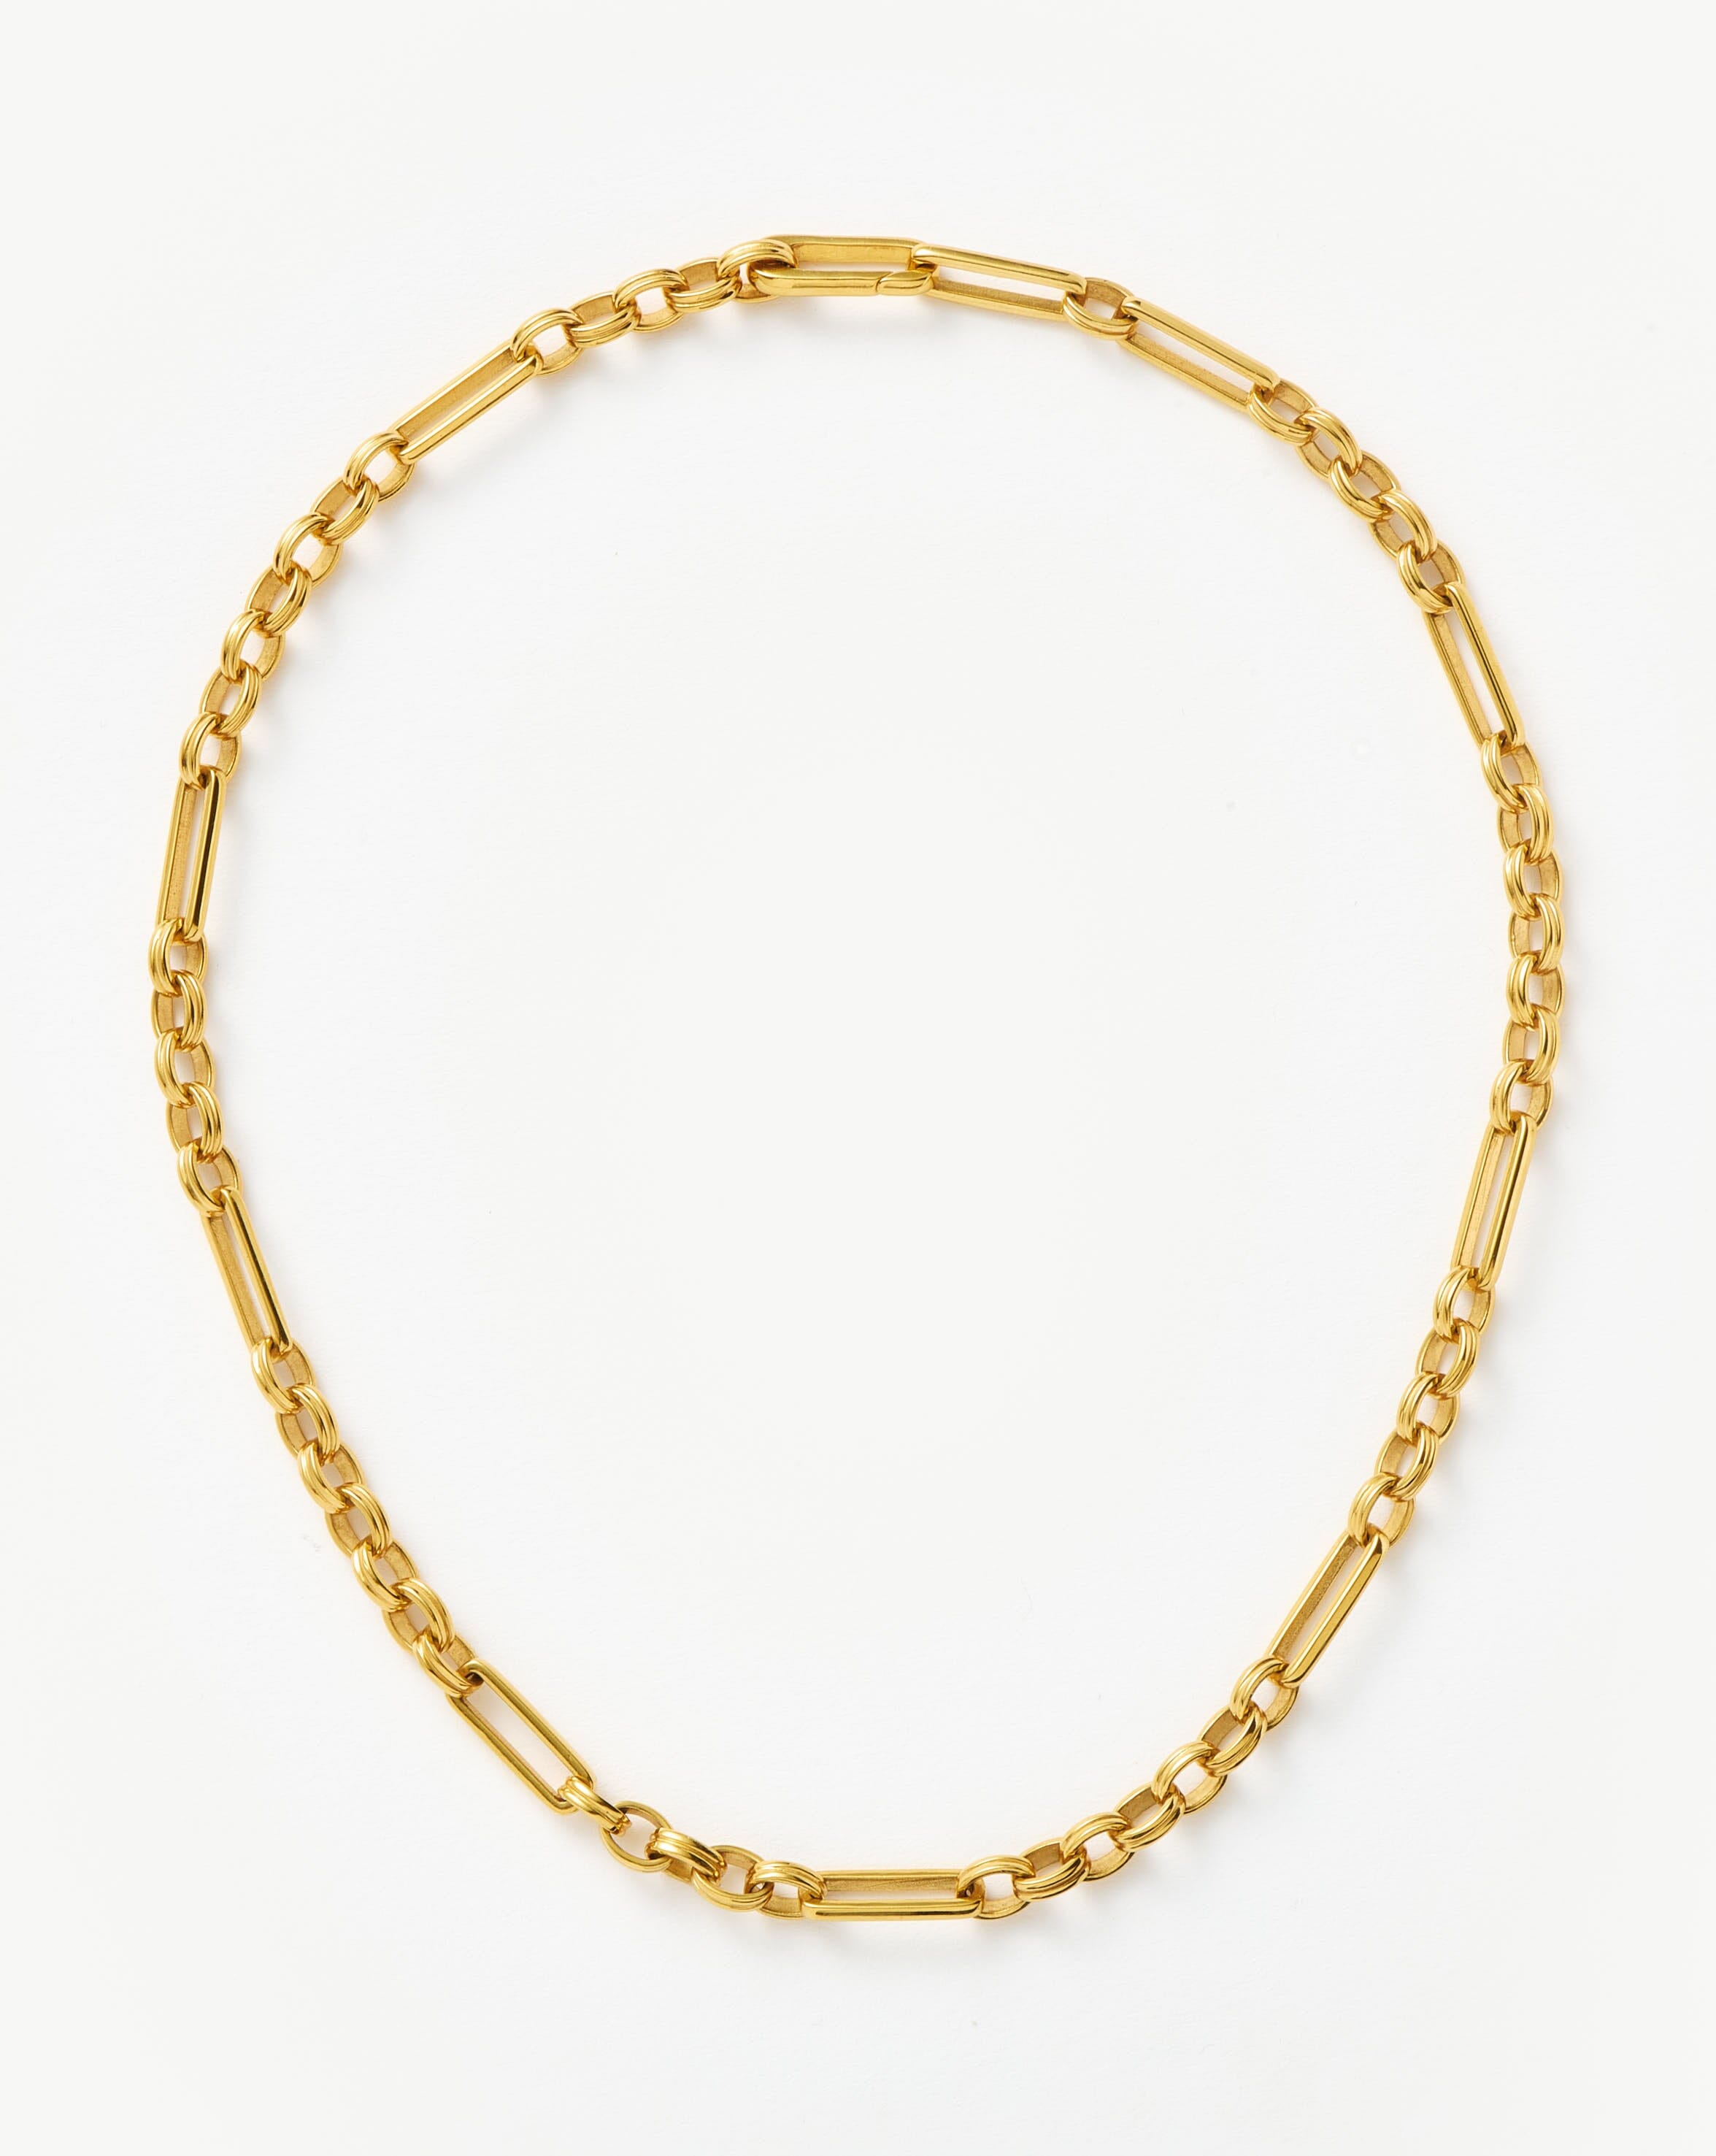 Missoma Valentine's Ridge Heart Pendant Necklace in Gold